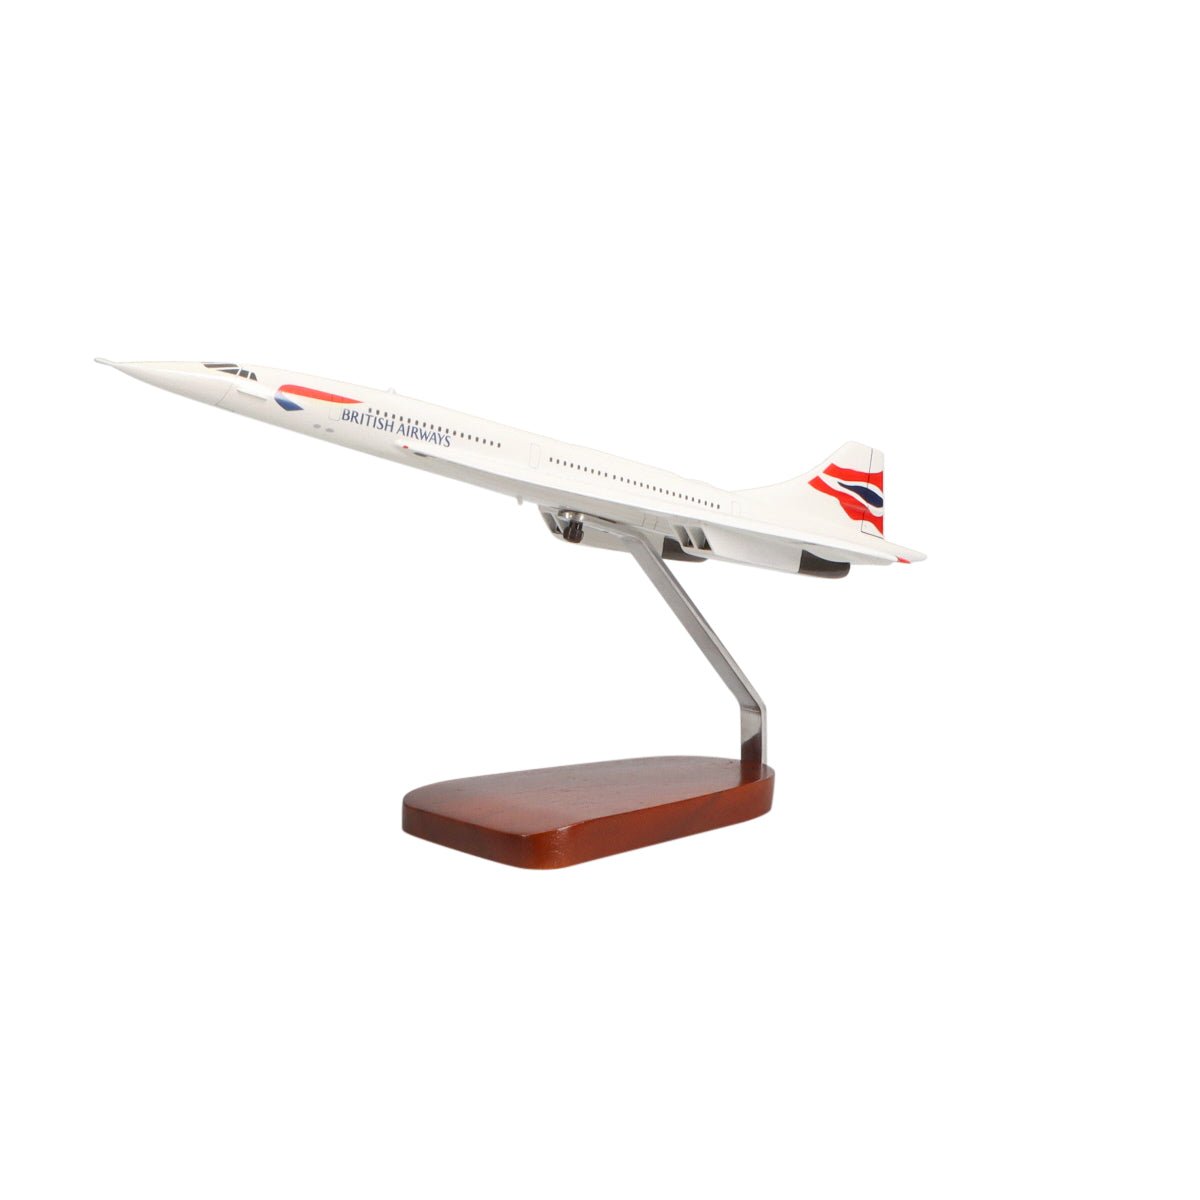 Aerospatiale/BAC Concorde British Airways Limited Edition Large Mahogany Model - PilotMall.com